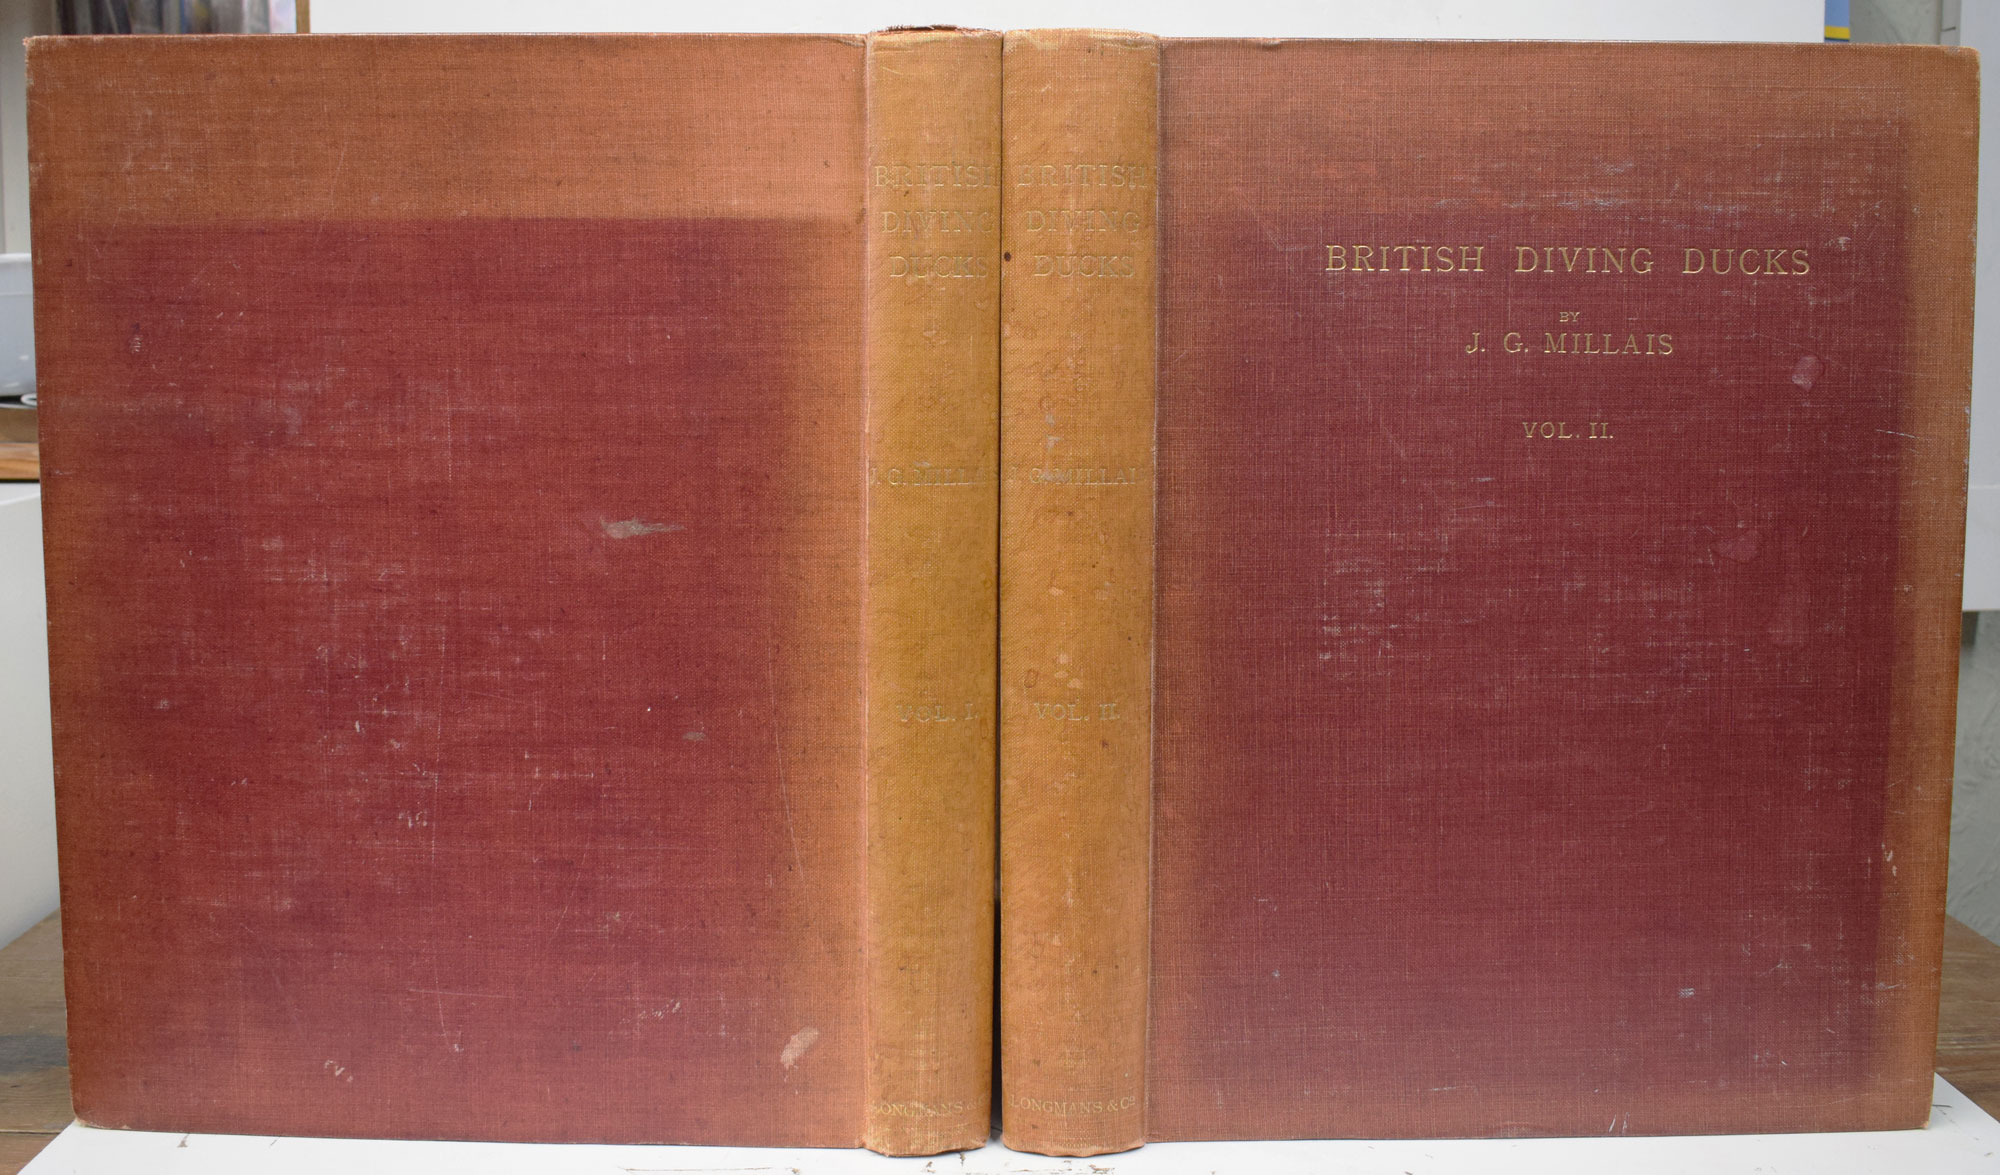 MILLAIS, JOHN GUILLE - British Diving Ducks. 2 Volume Set. Limited Edition